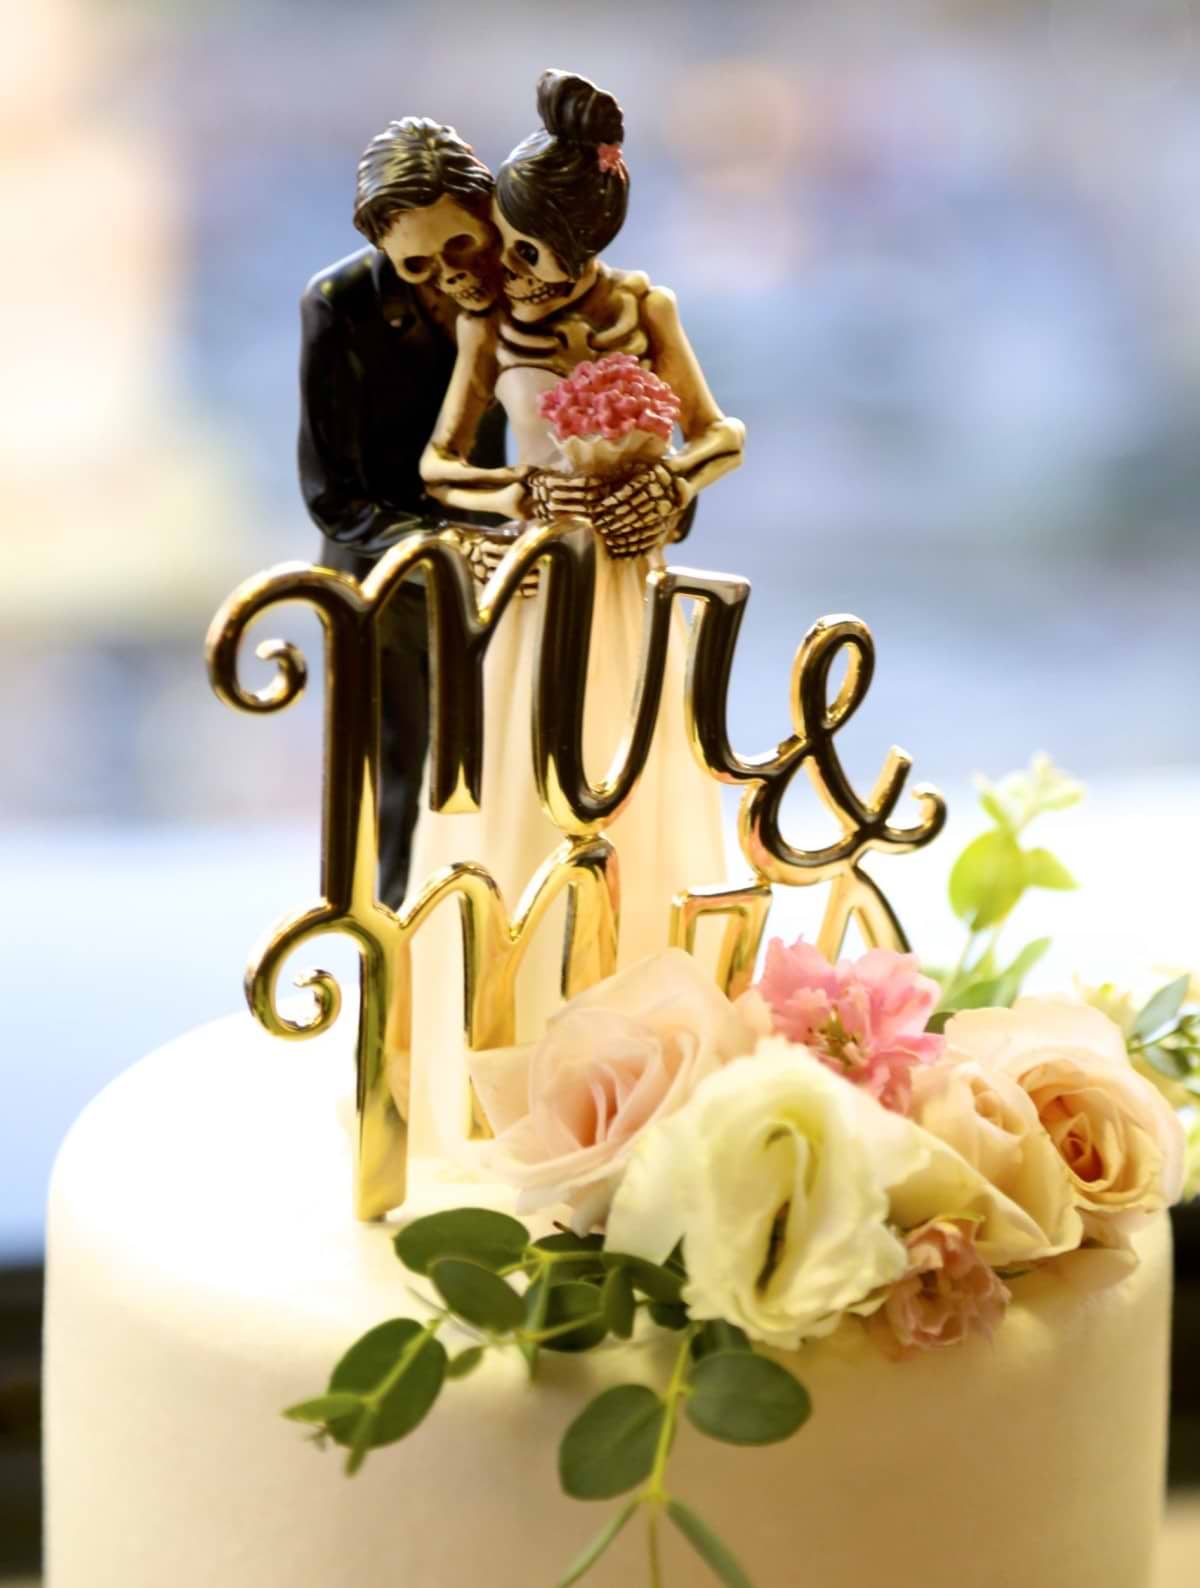 a Macabre skeleton bride and groom wedding cake topper